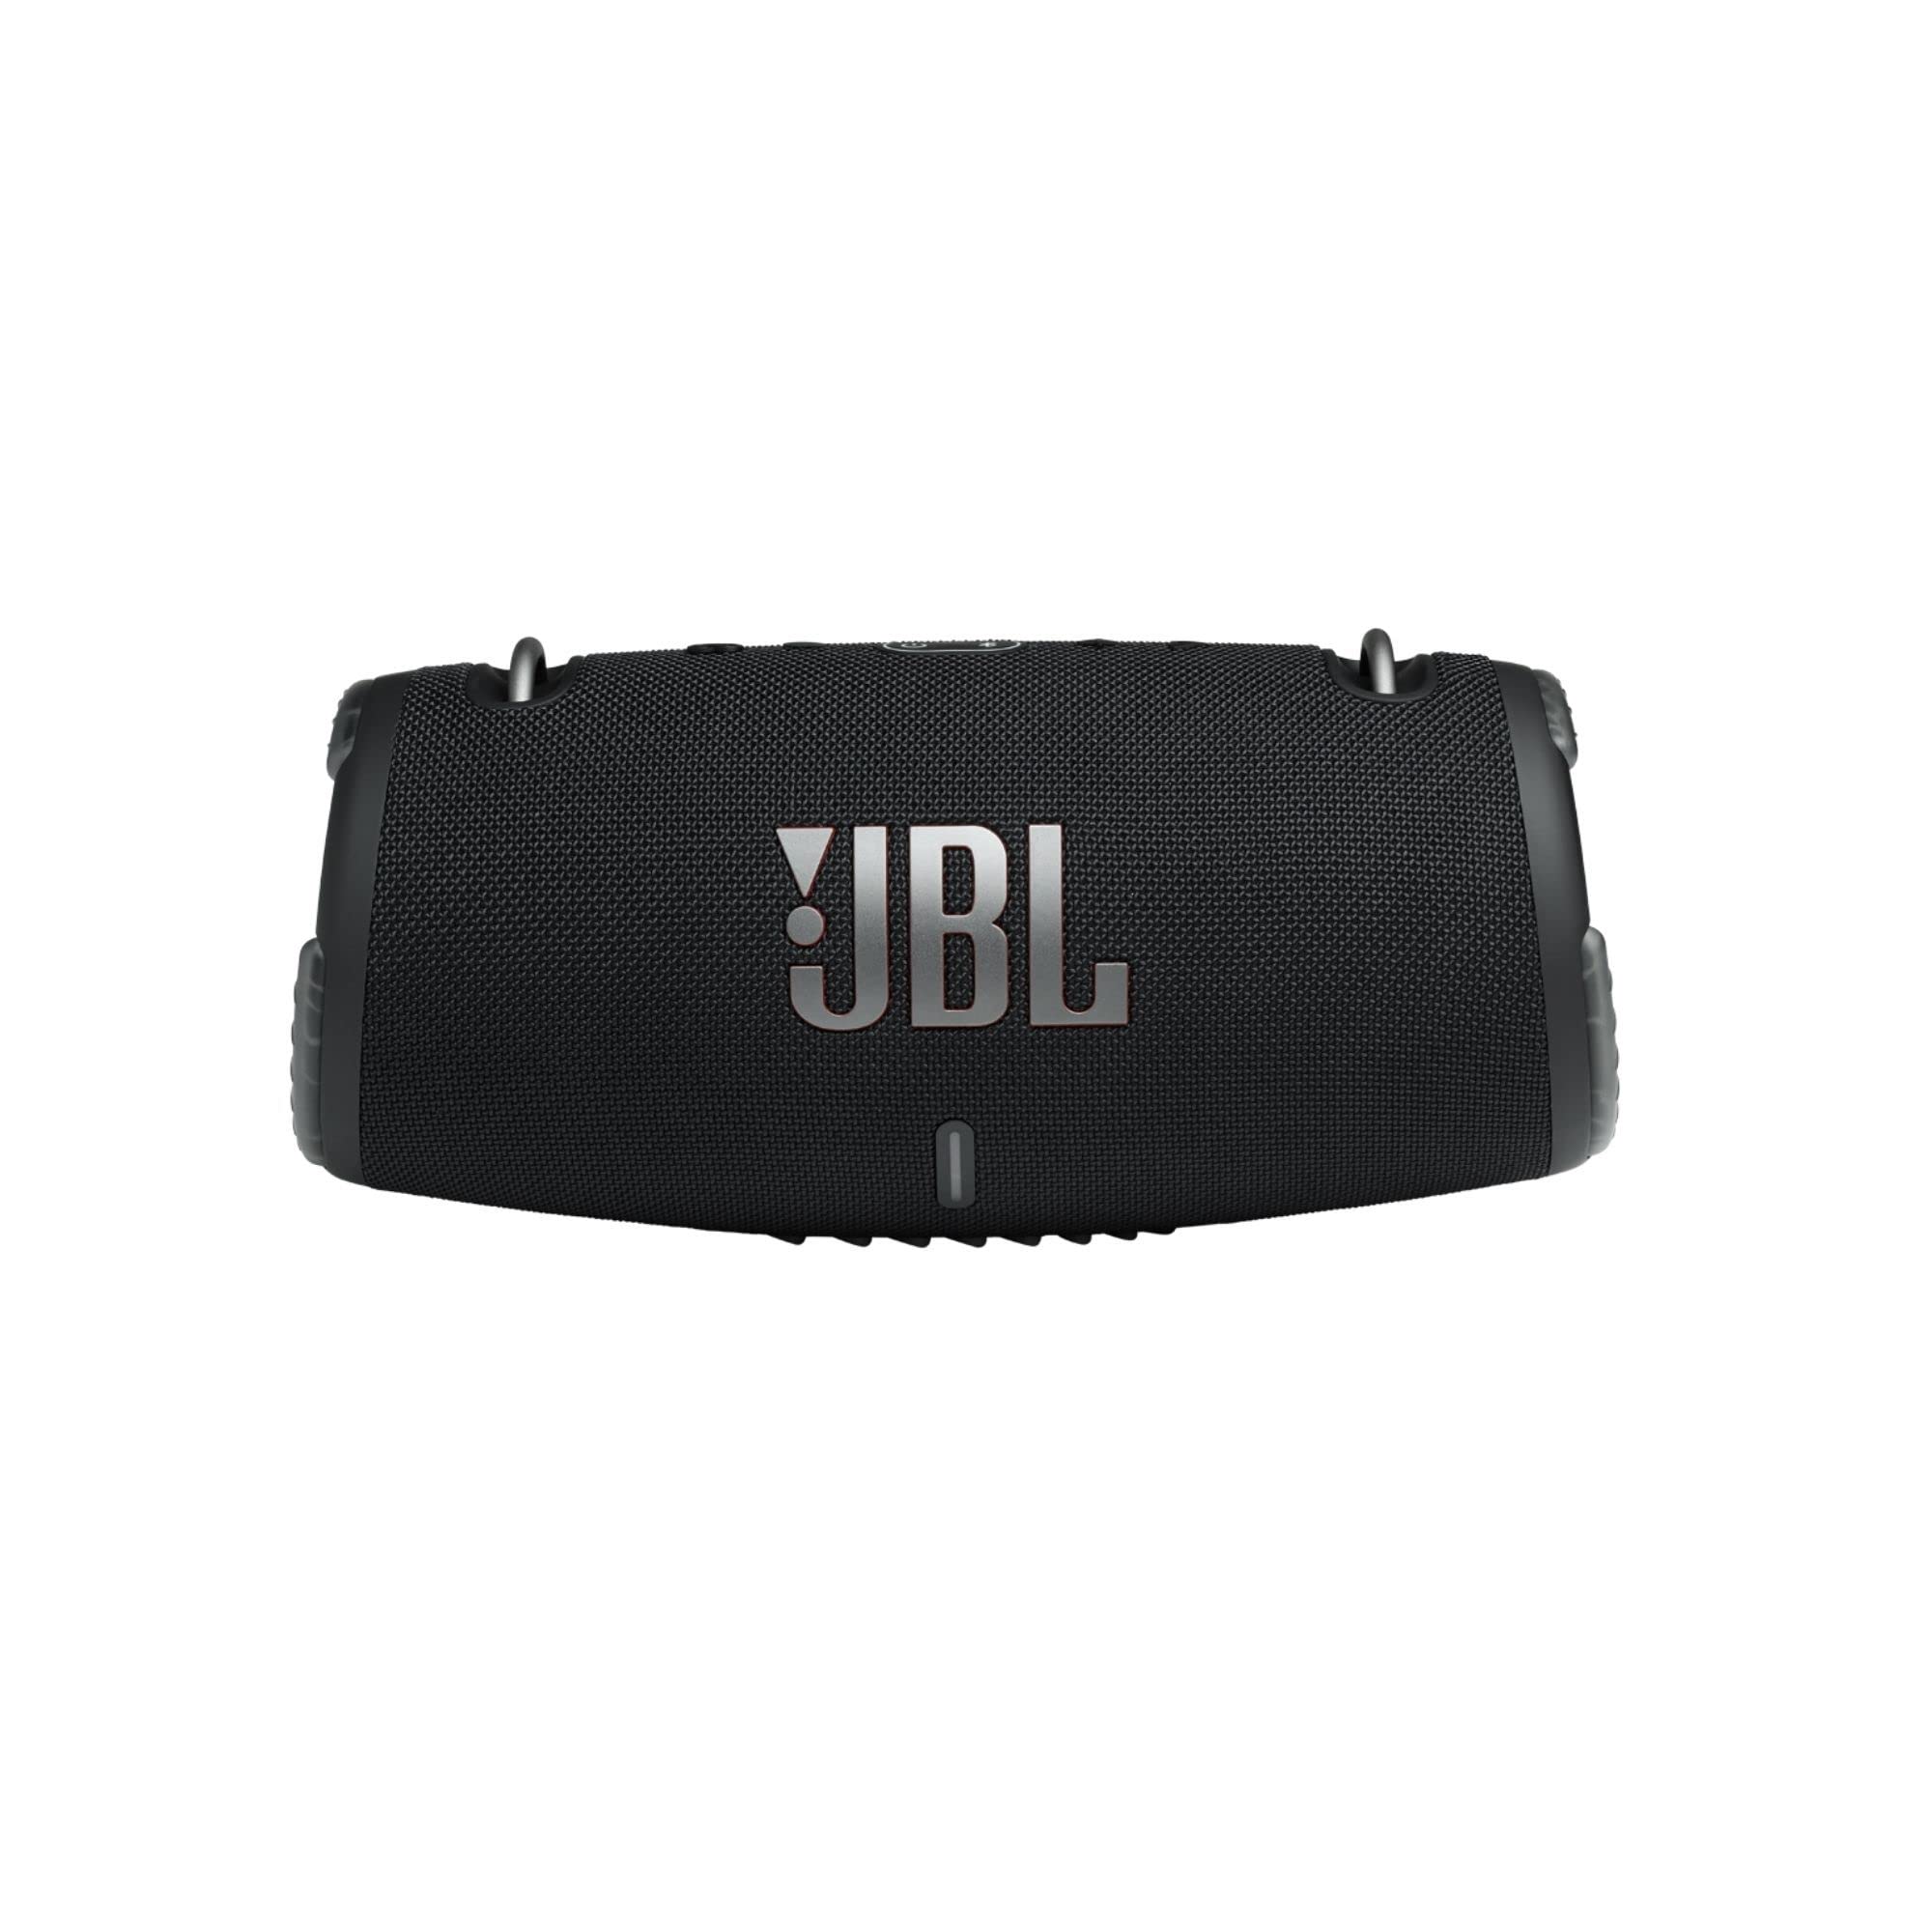  JBL Xtreme 3 - ポータブル Bluetooth スピーカー、パワフルなサウンドと重低音、IP67 防水、15 時間の再生時間、パワーバンク、マルチスピーカー ペアリ...